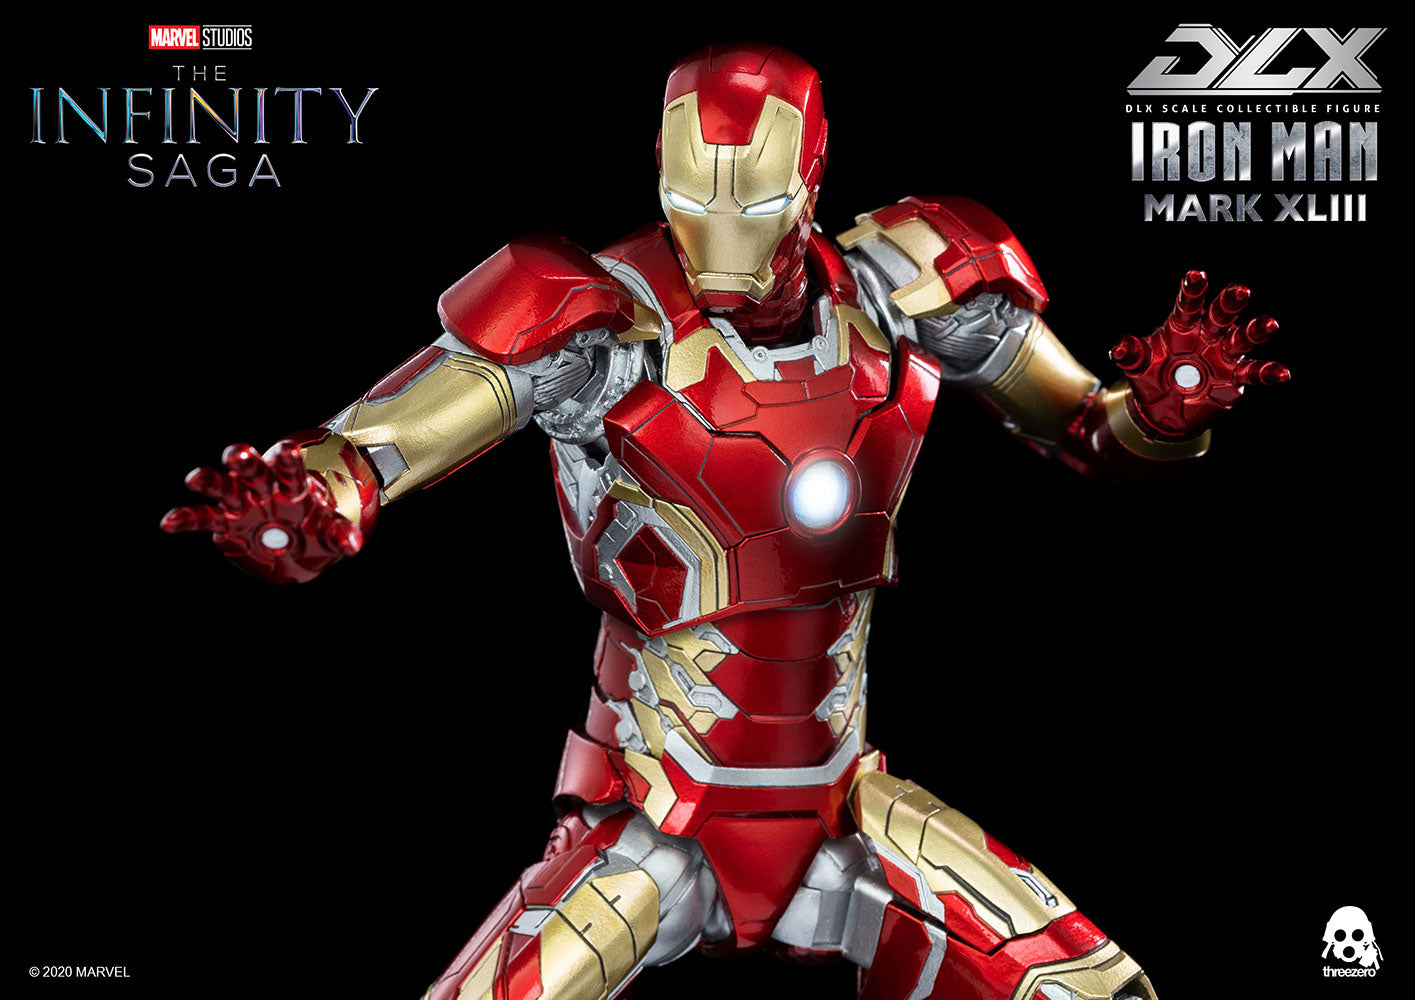 Iron Man Mark XLIII The Avengers: Infinity Saga – Iron Man Mark XLIII 1:12 DLX Collectible Figure